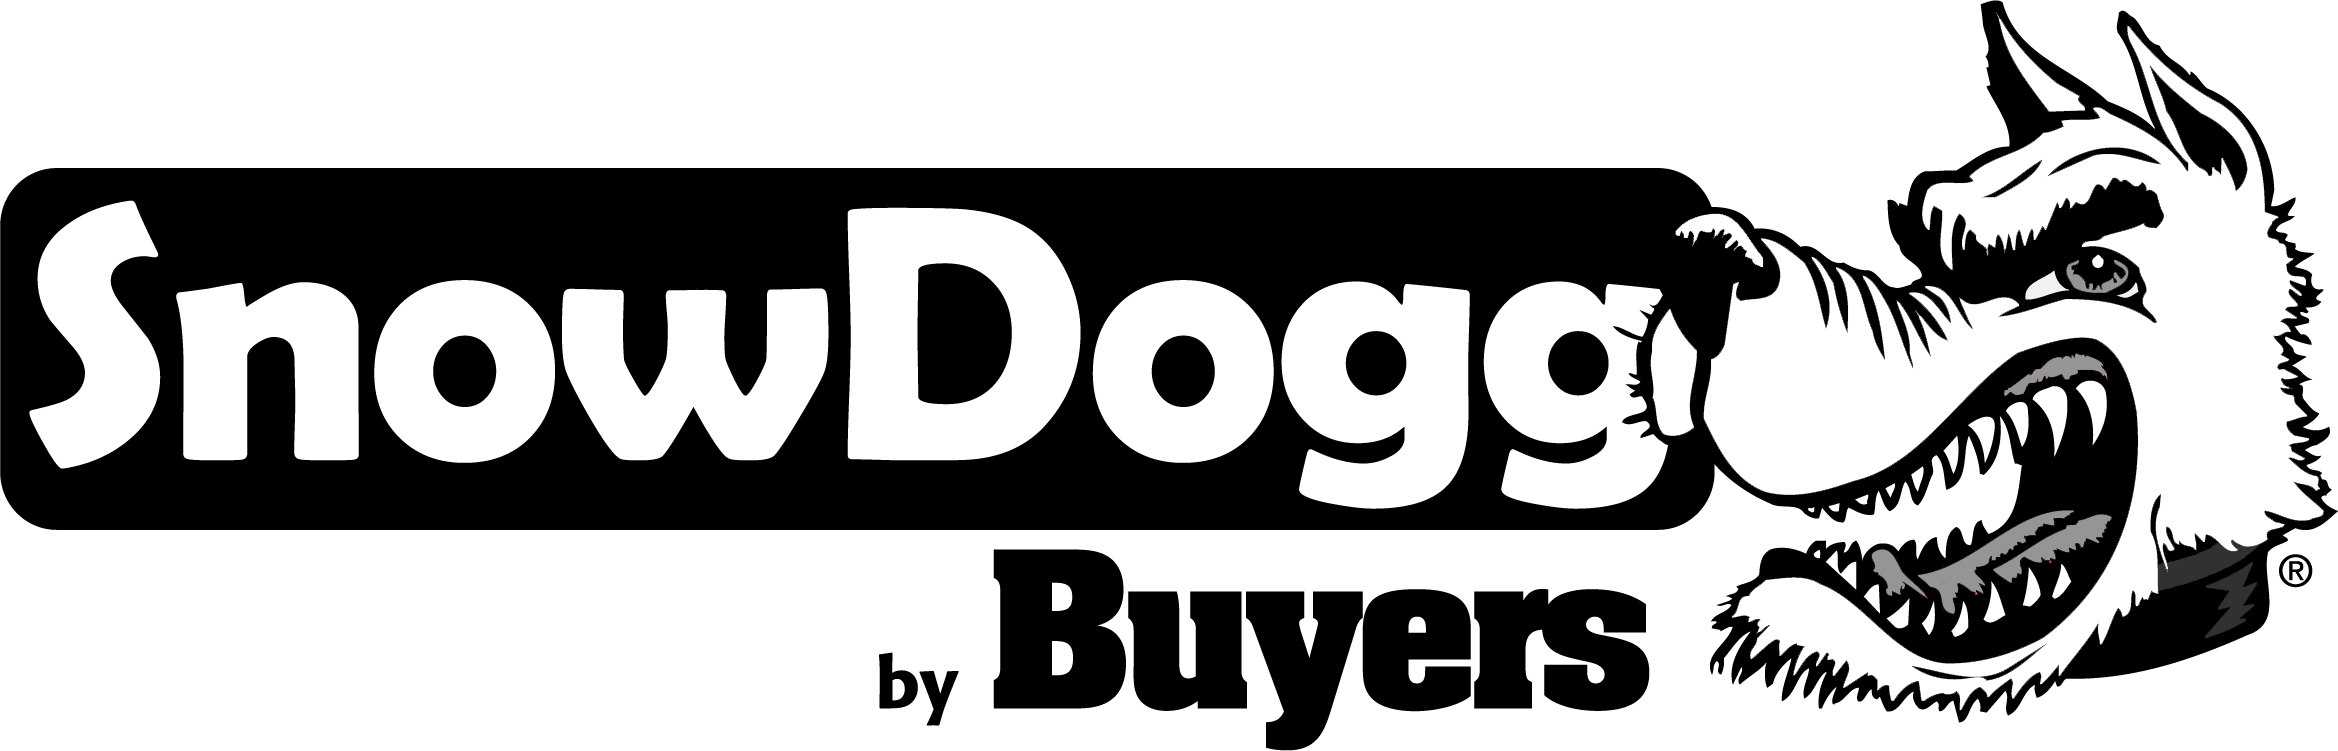 Snow Dogg by Buyers logo